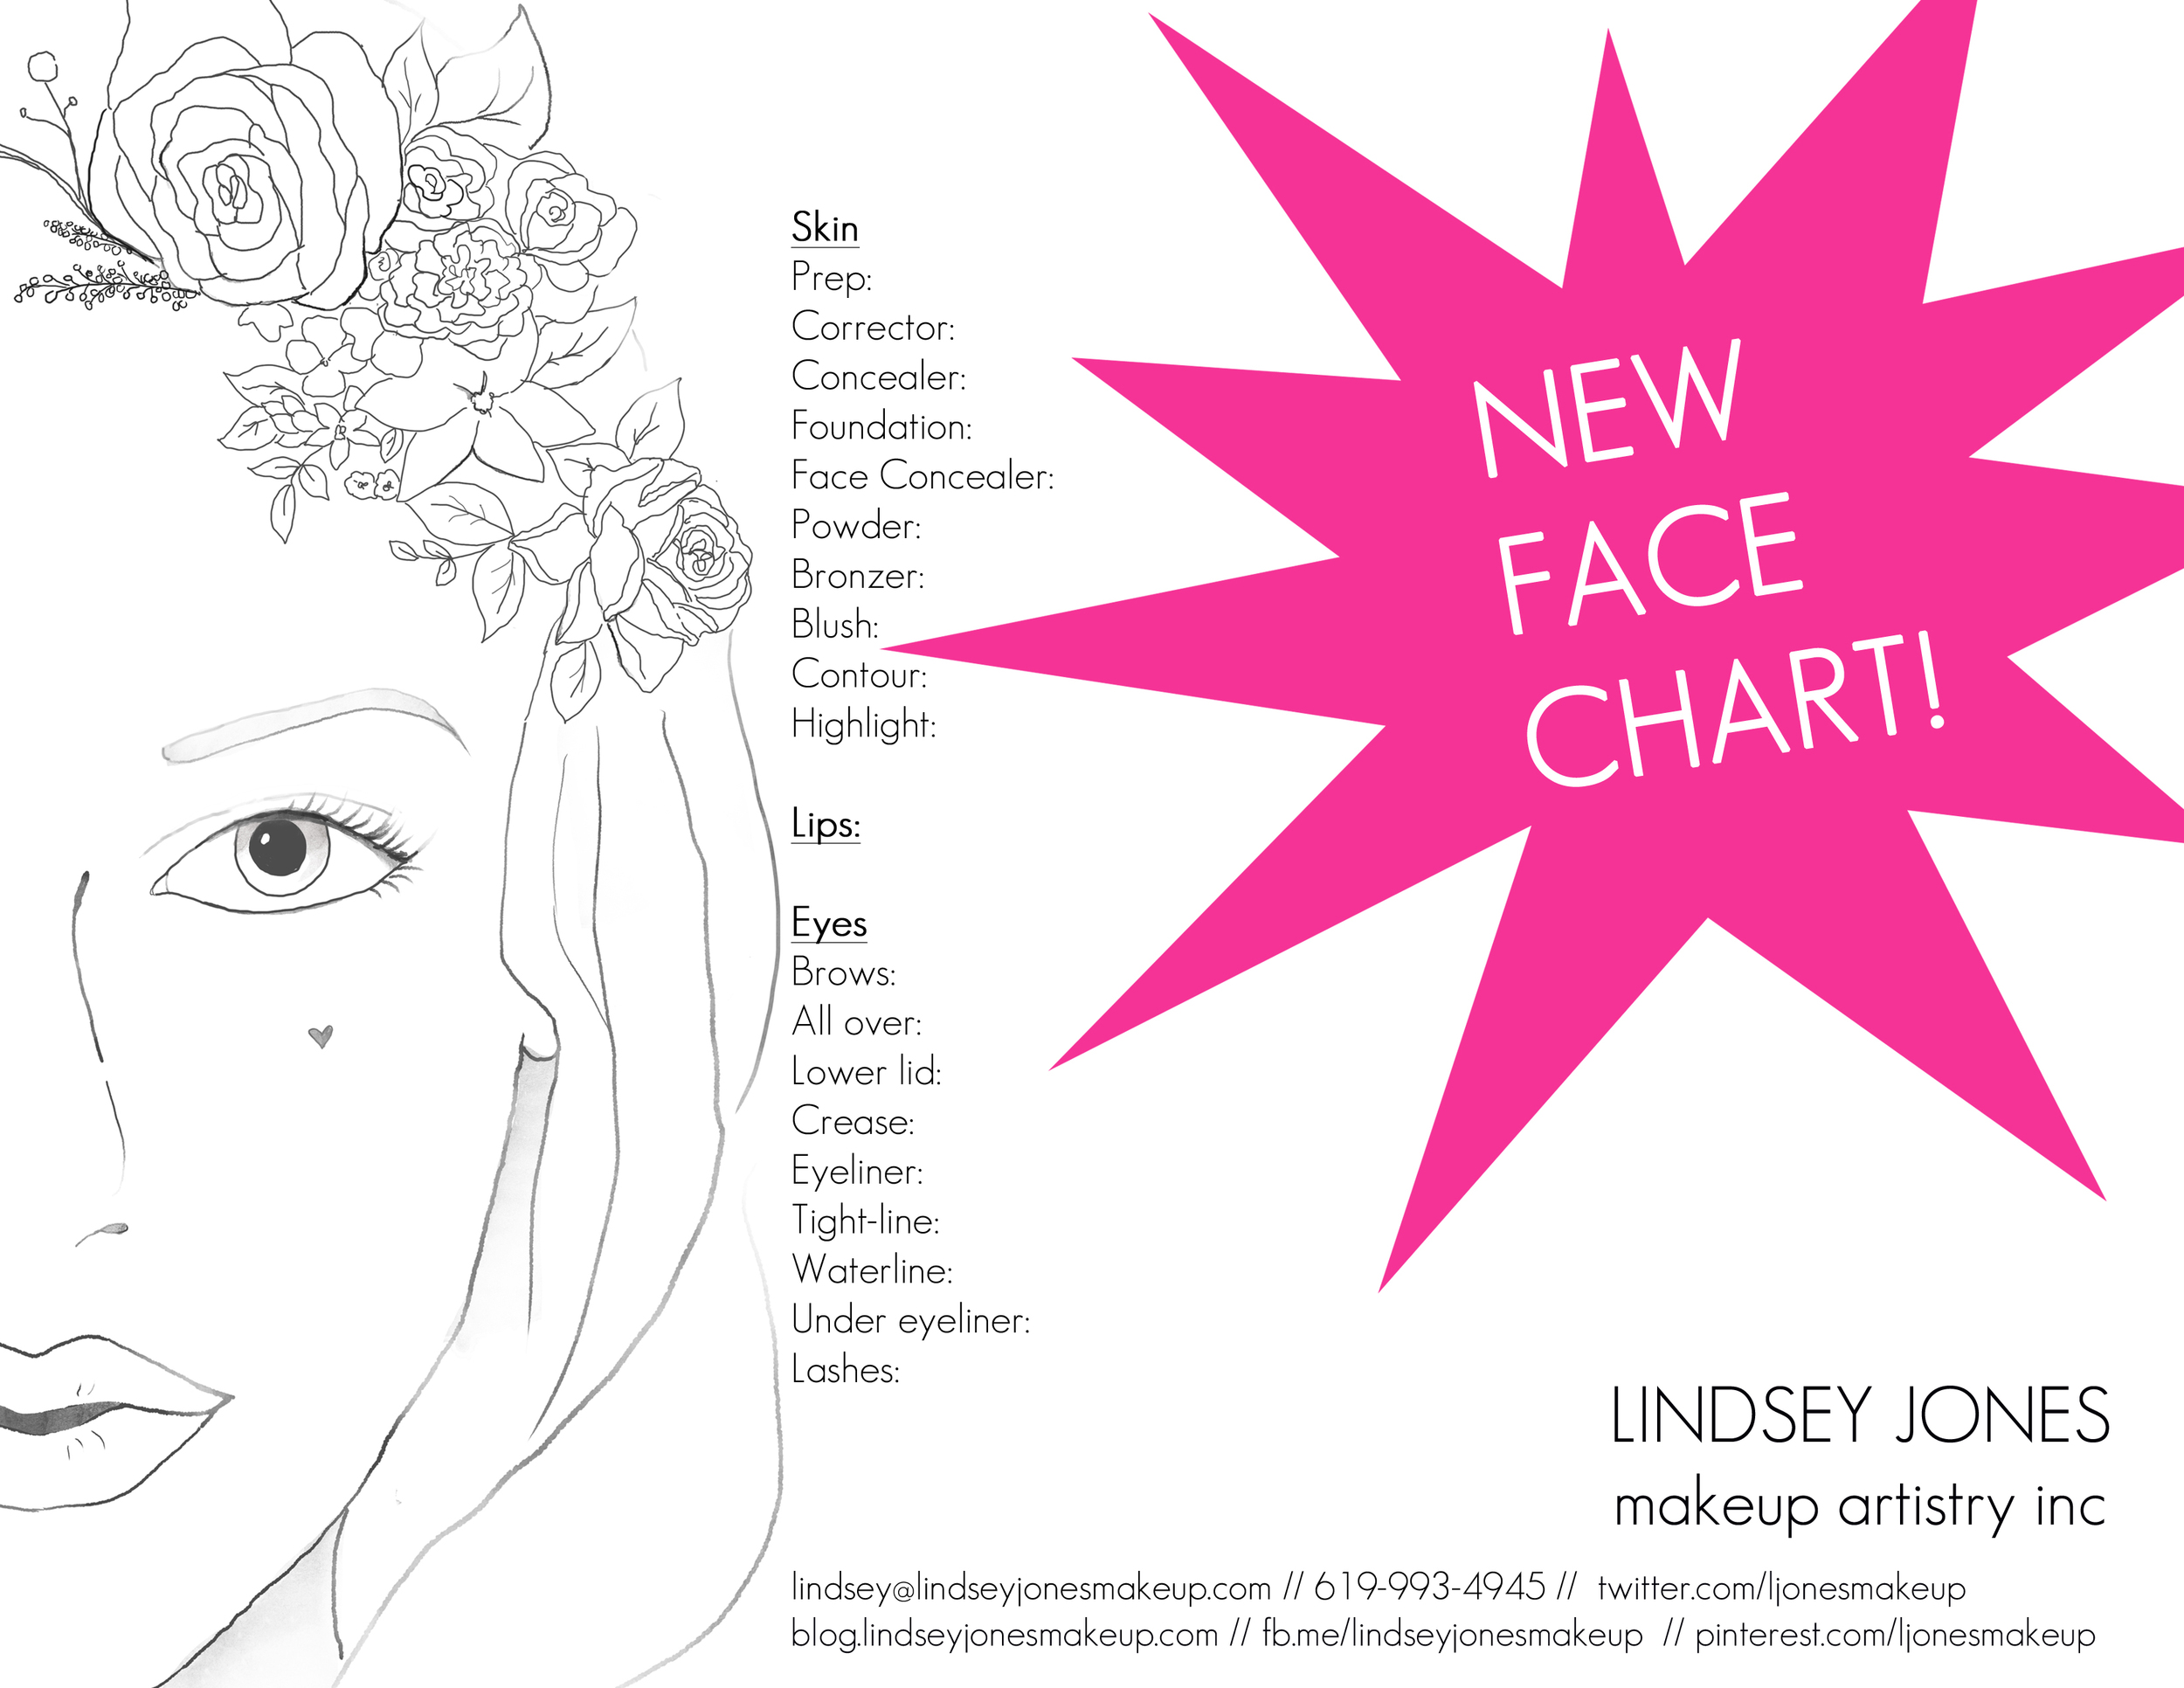 Face Chart Feb 8 2013 pink star NEW FACE CHART